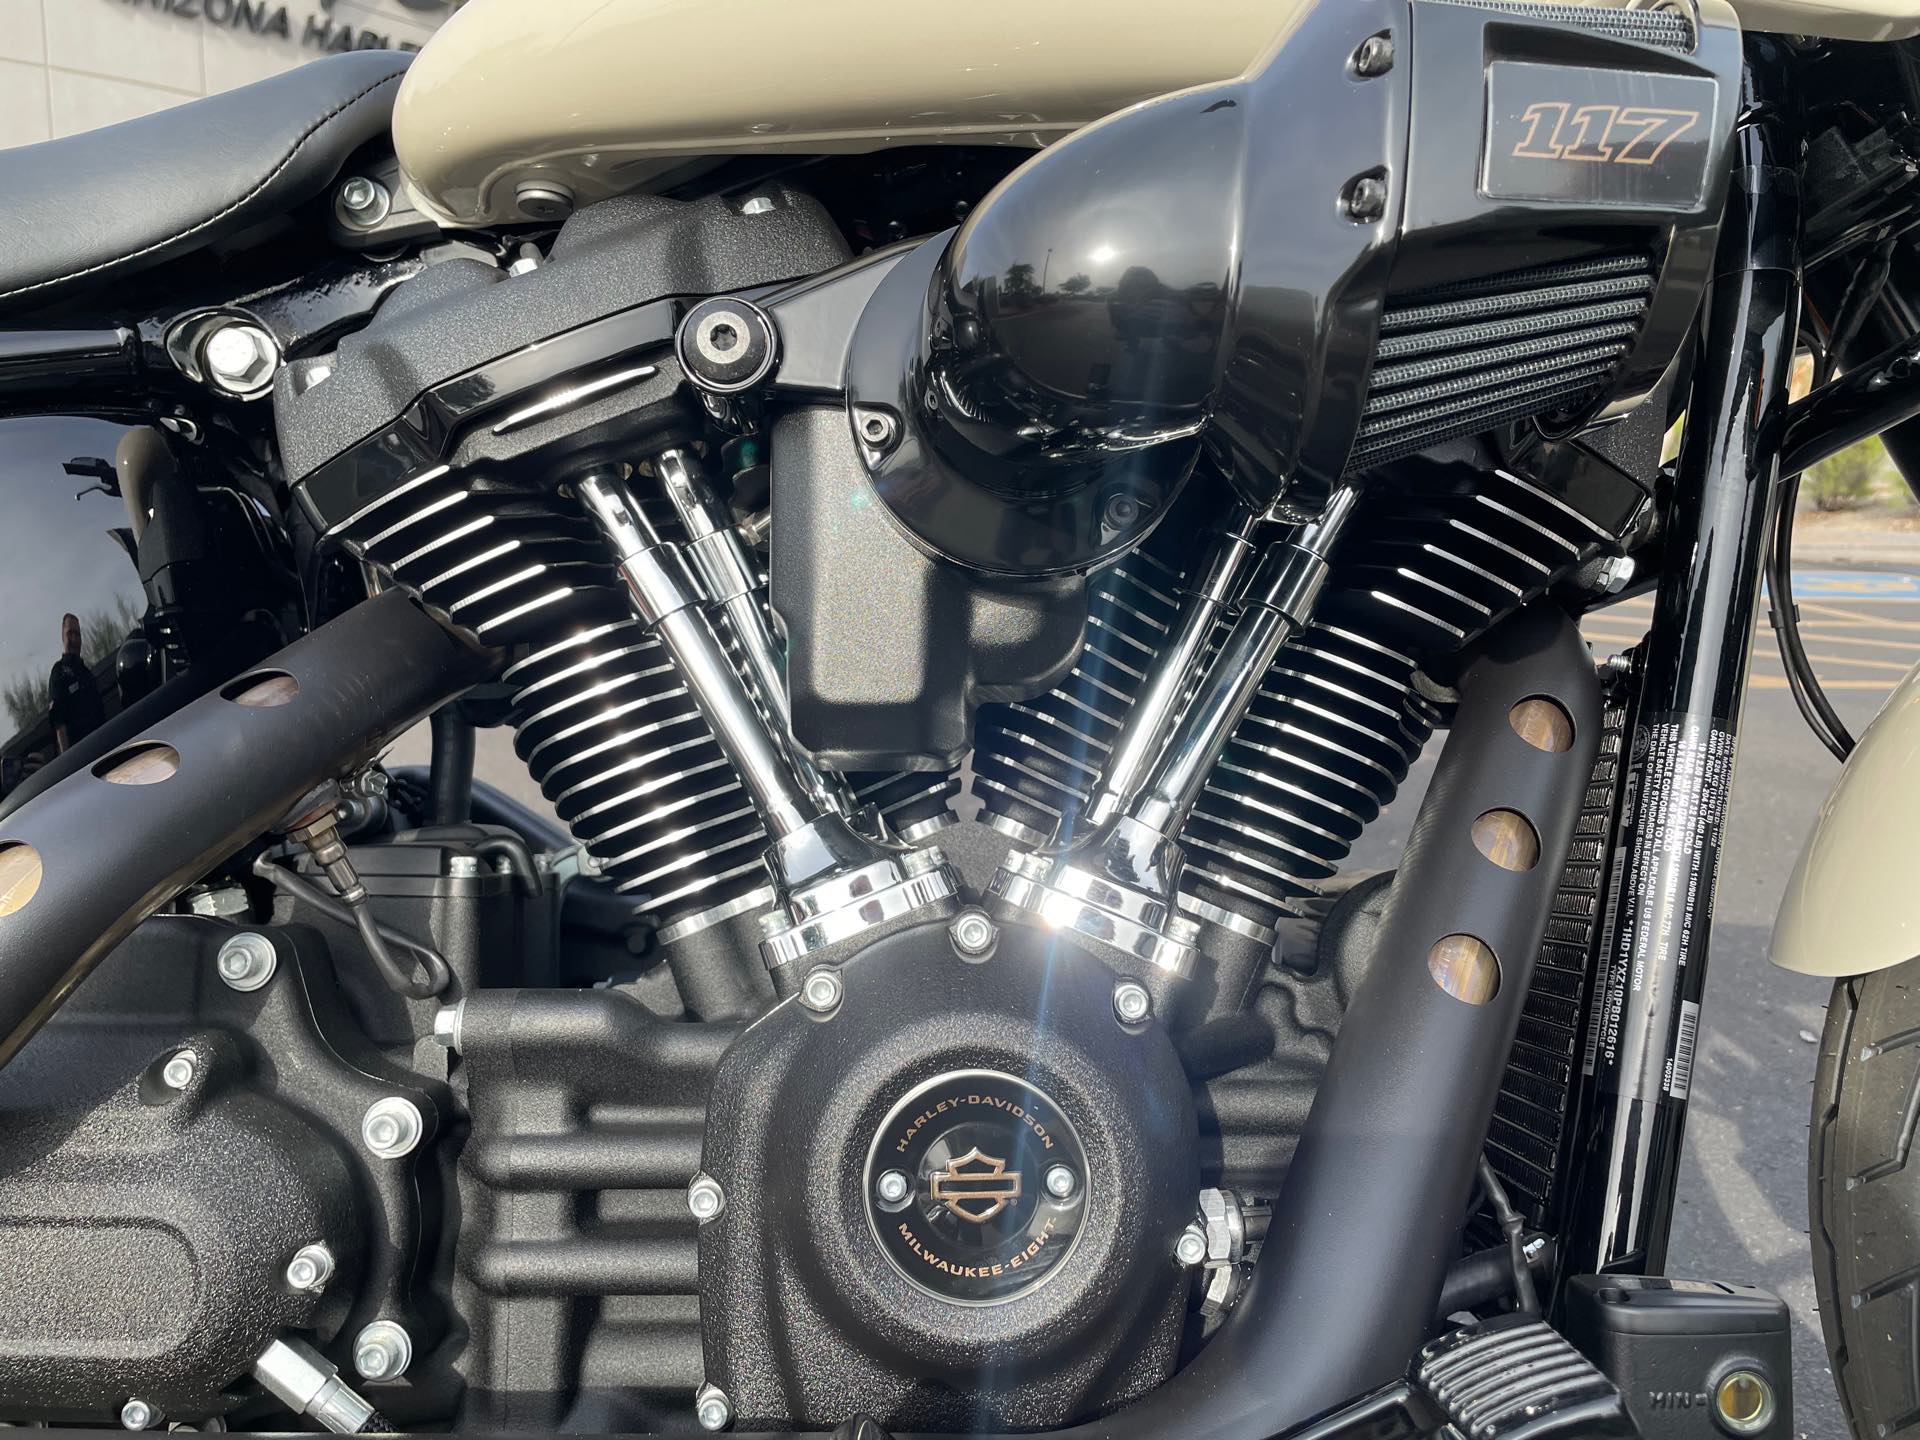 2023 Harley-Davidson Softail Low Rider ST at Buddy Stubbs Arizona Harley-Davidson